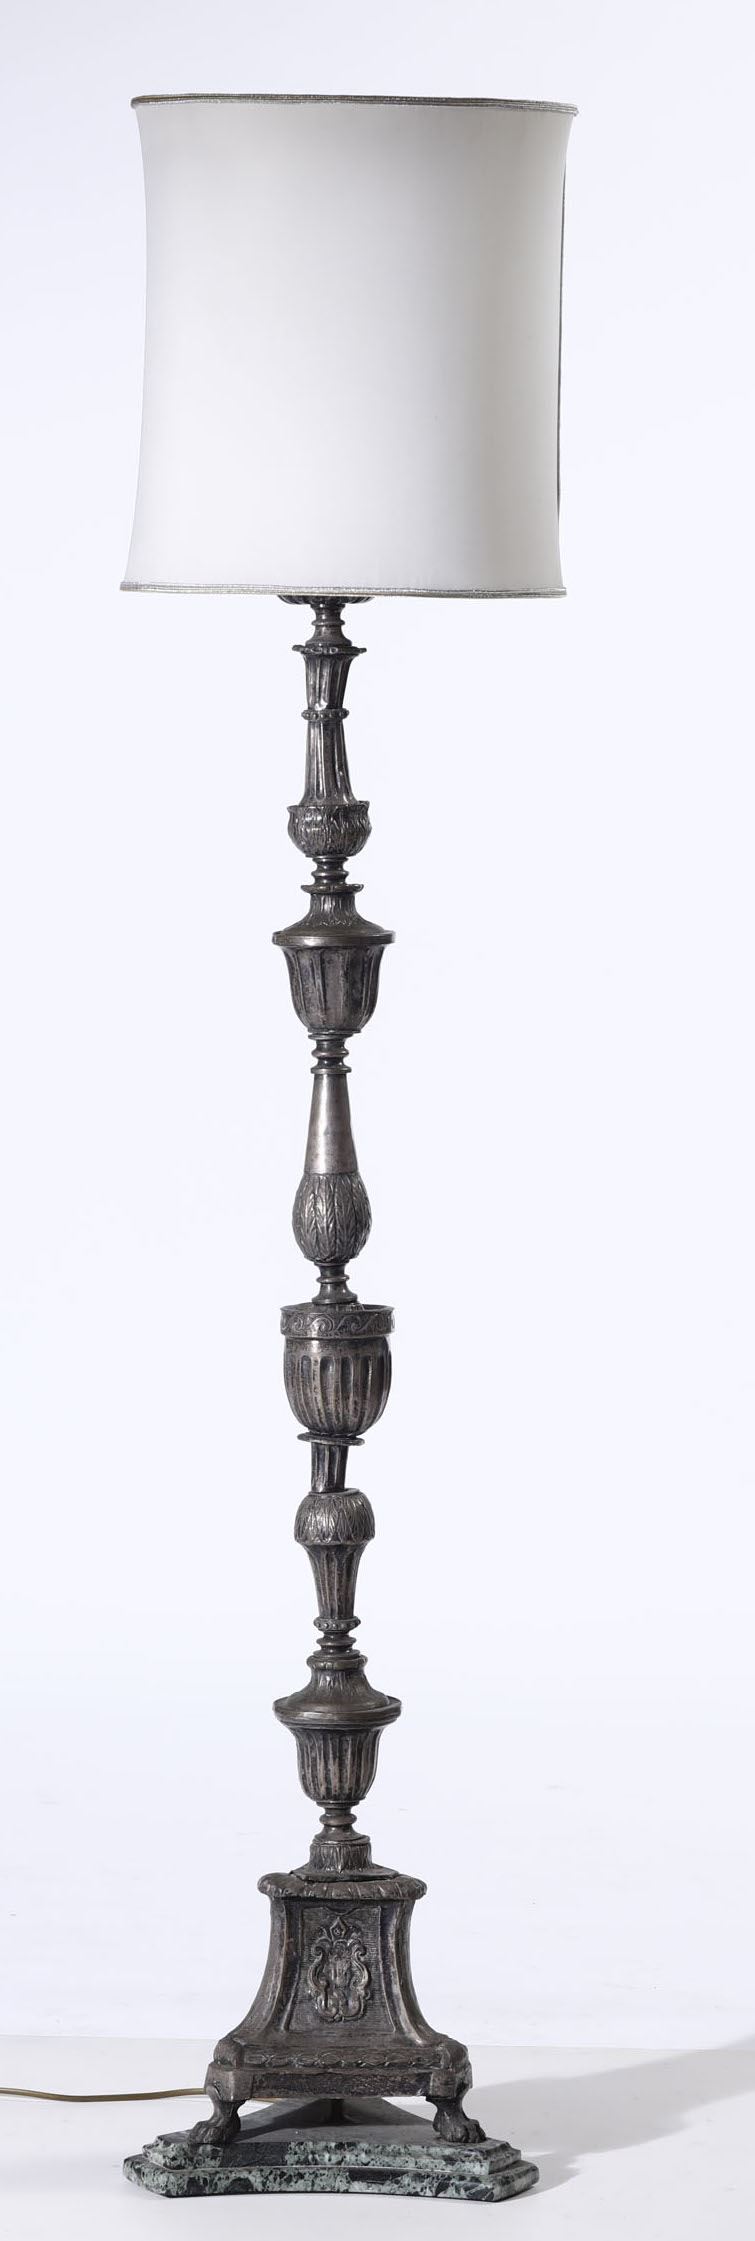 Torciera in metallo argentato. Italia centrale, XIX secolo  - Auction Antiques II - Timed Auction - Cambi Casa d'Aste